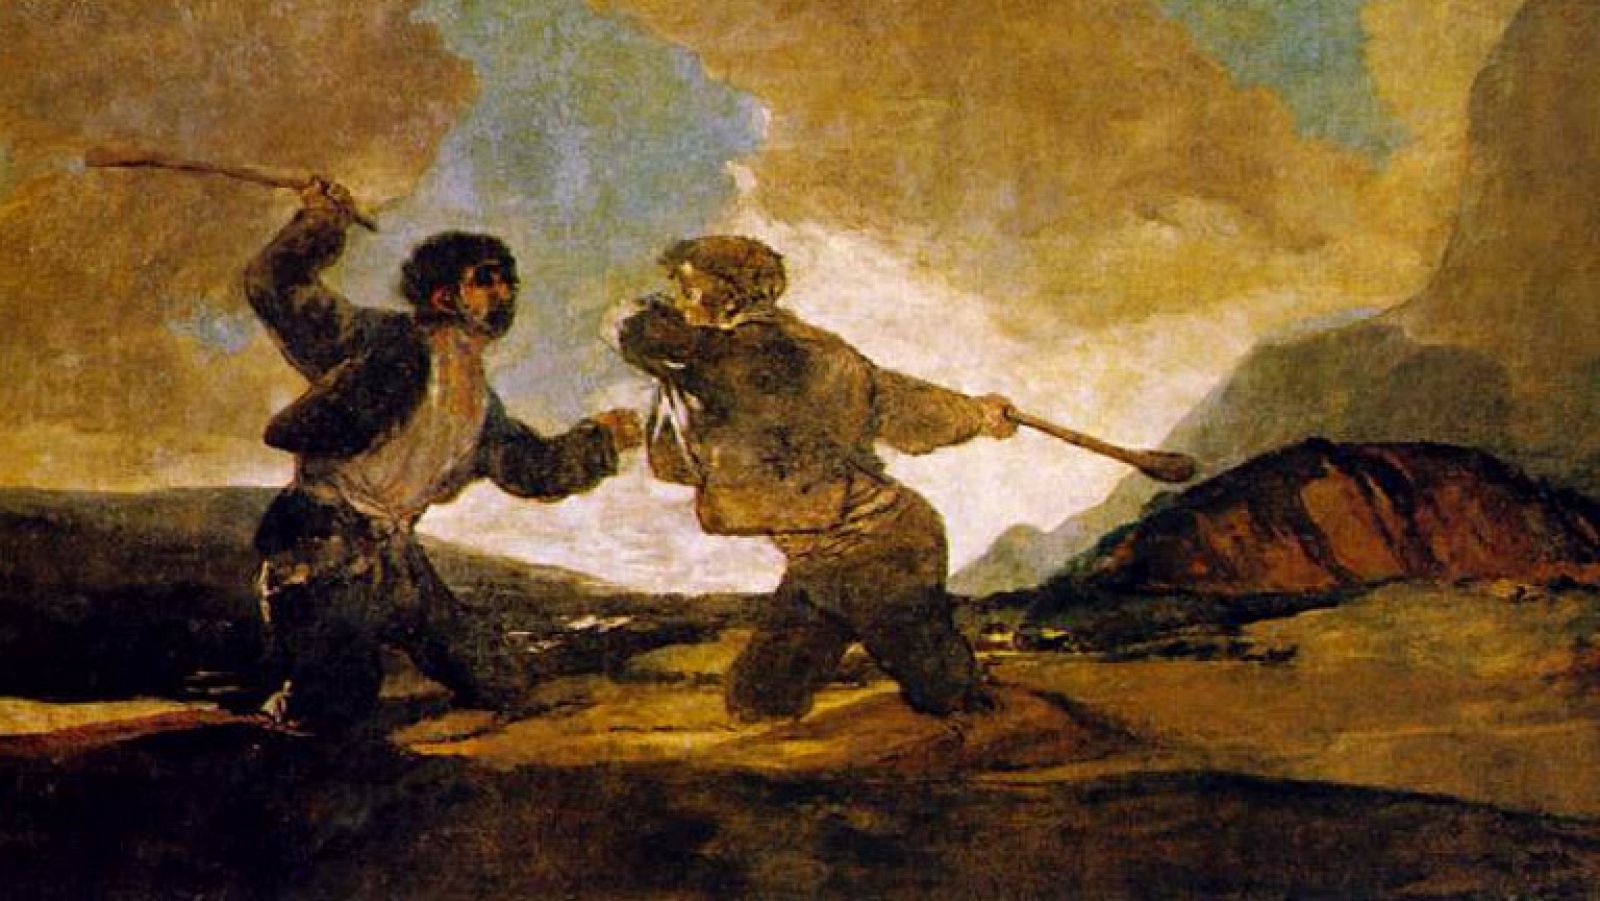 Mirar un cuadro - Duelo a garrotazos (Goya) - RTVE.es